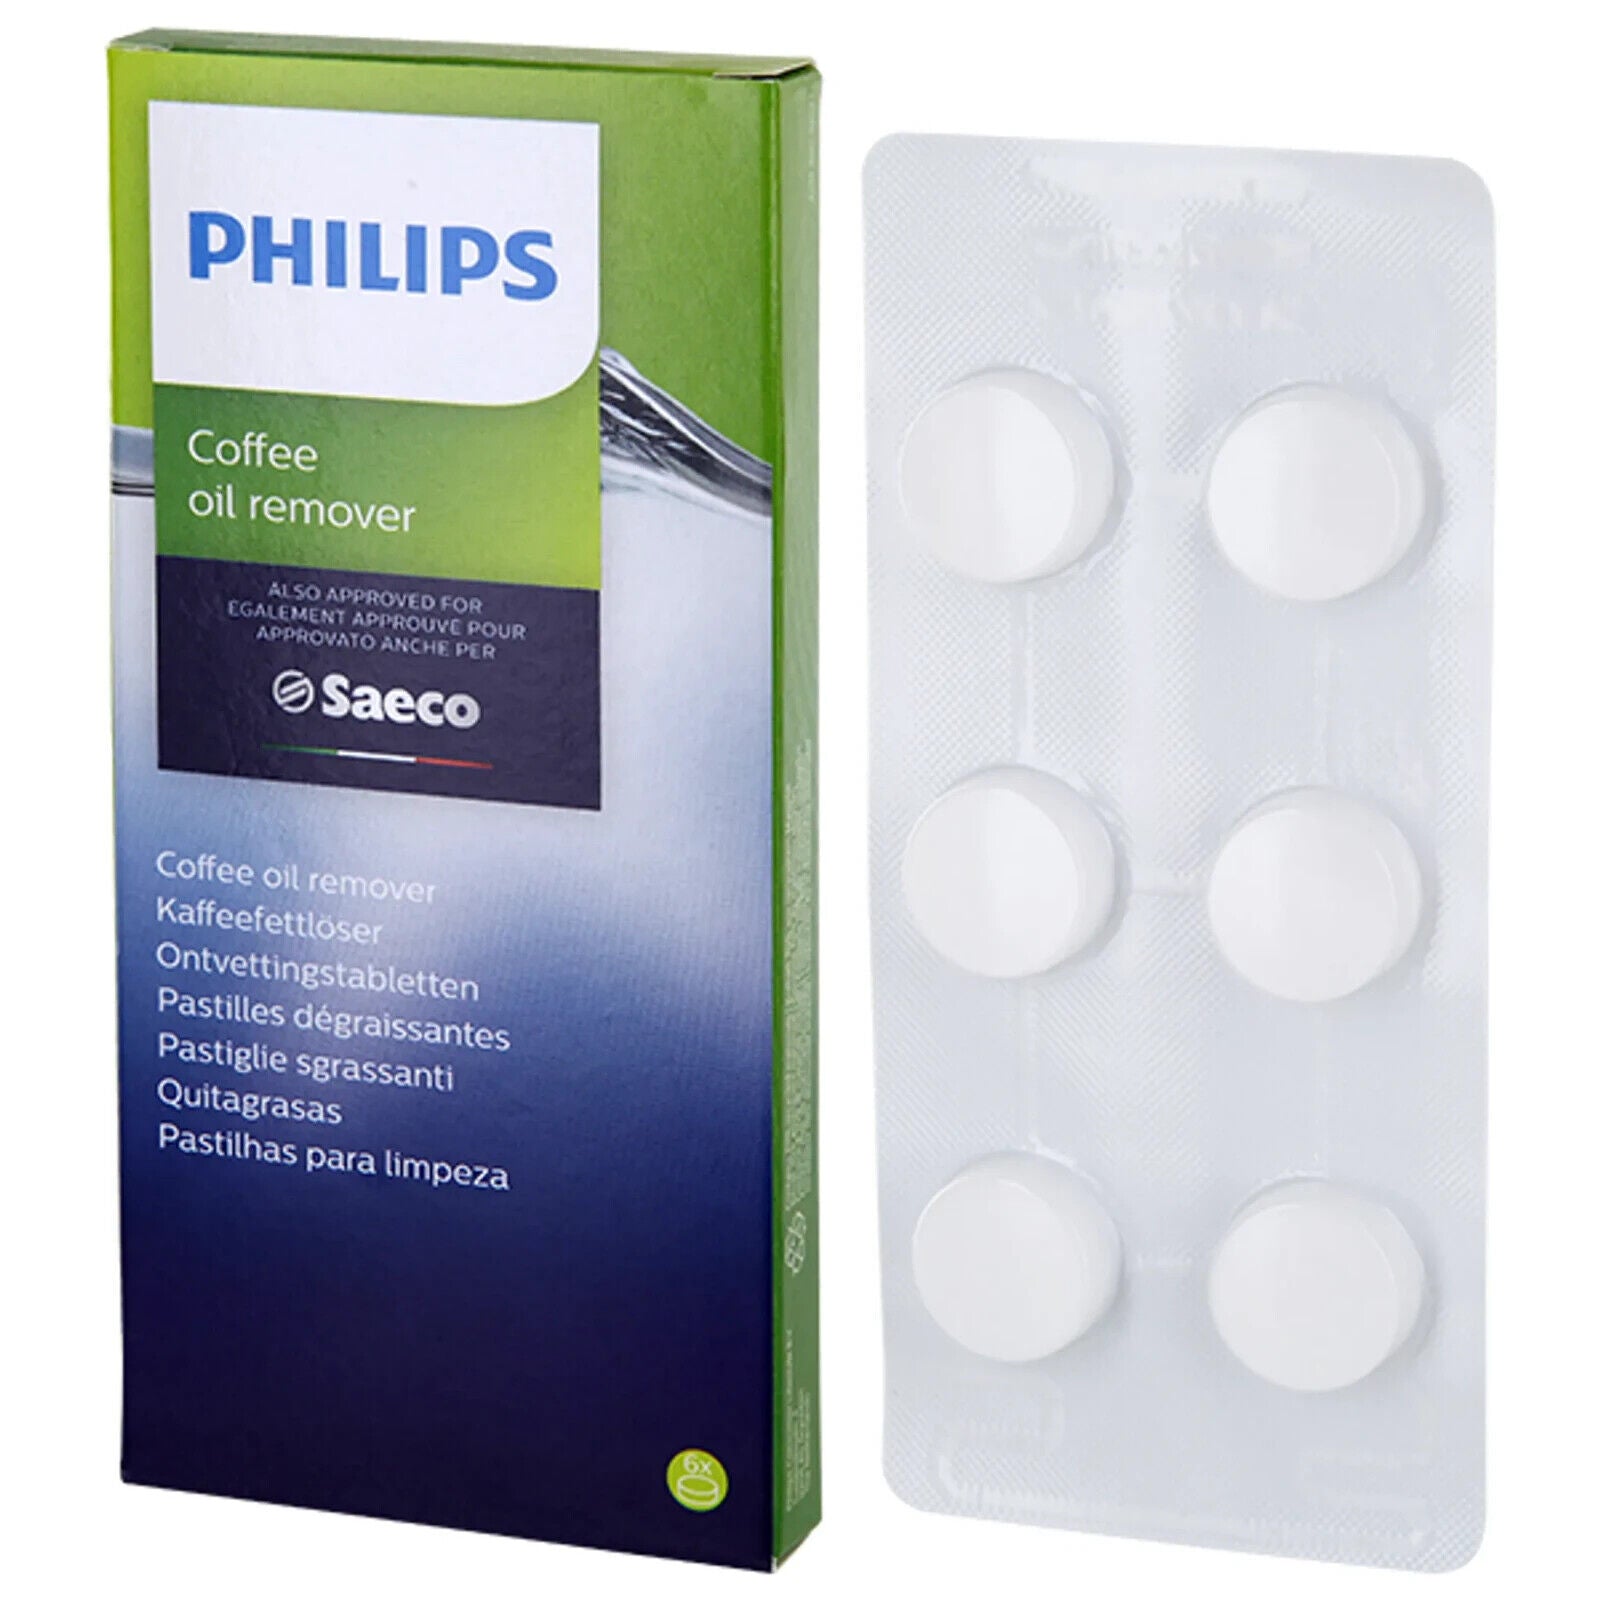 Philips Reinigungstabletten Kaffeefettlösende Tabletten für Kaffeevollautomaten SaecoCA6704/10